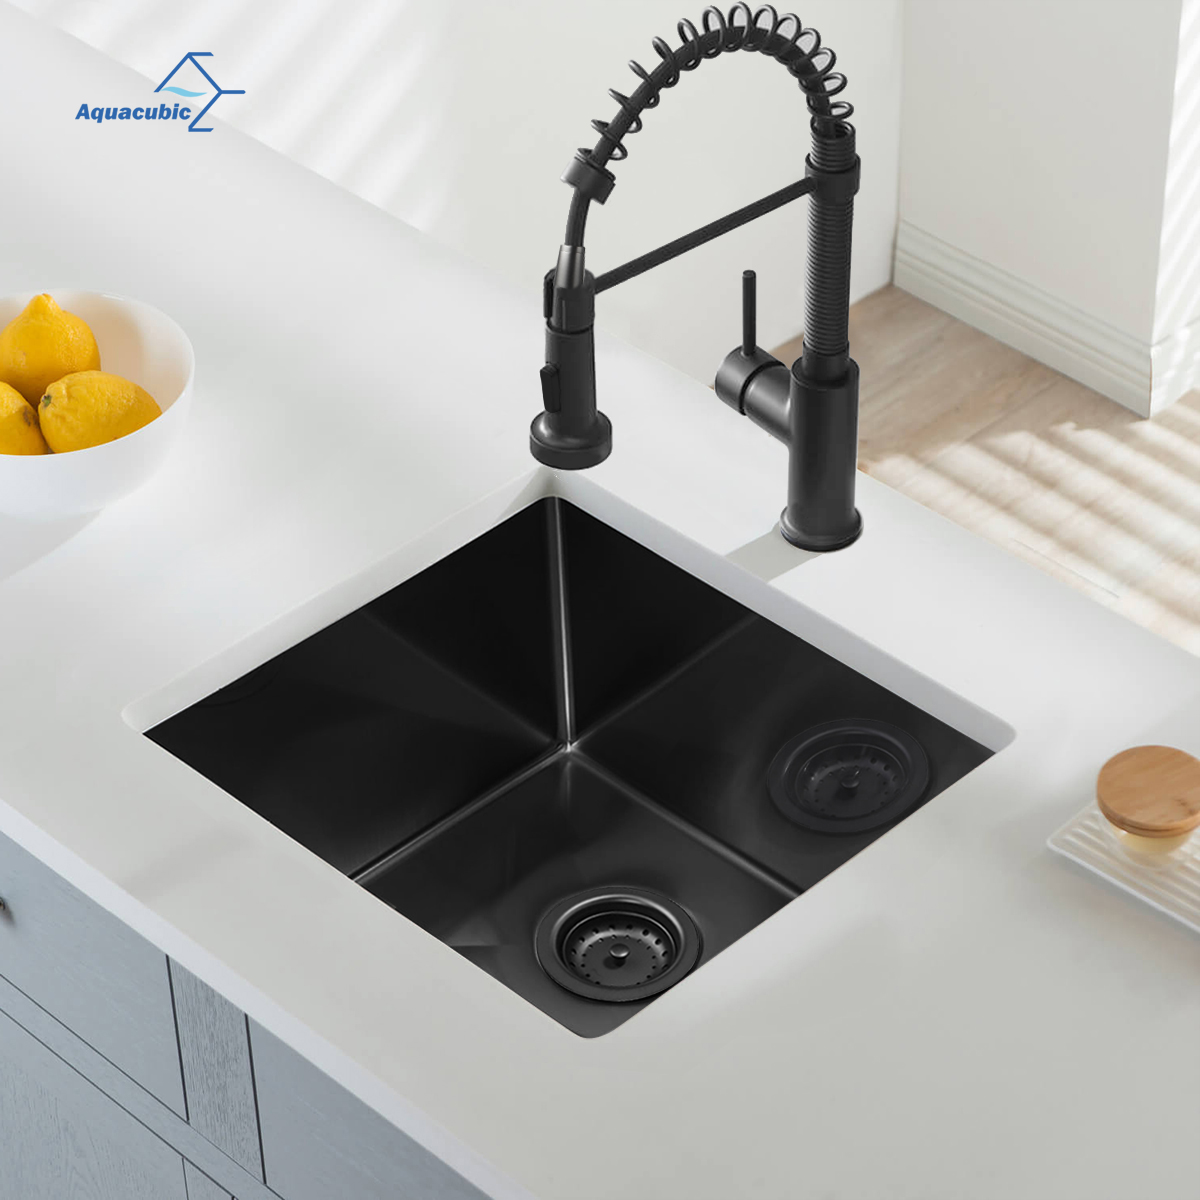 Black Stainless steel Single Bowl Undermount Kitchen Sink